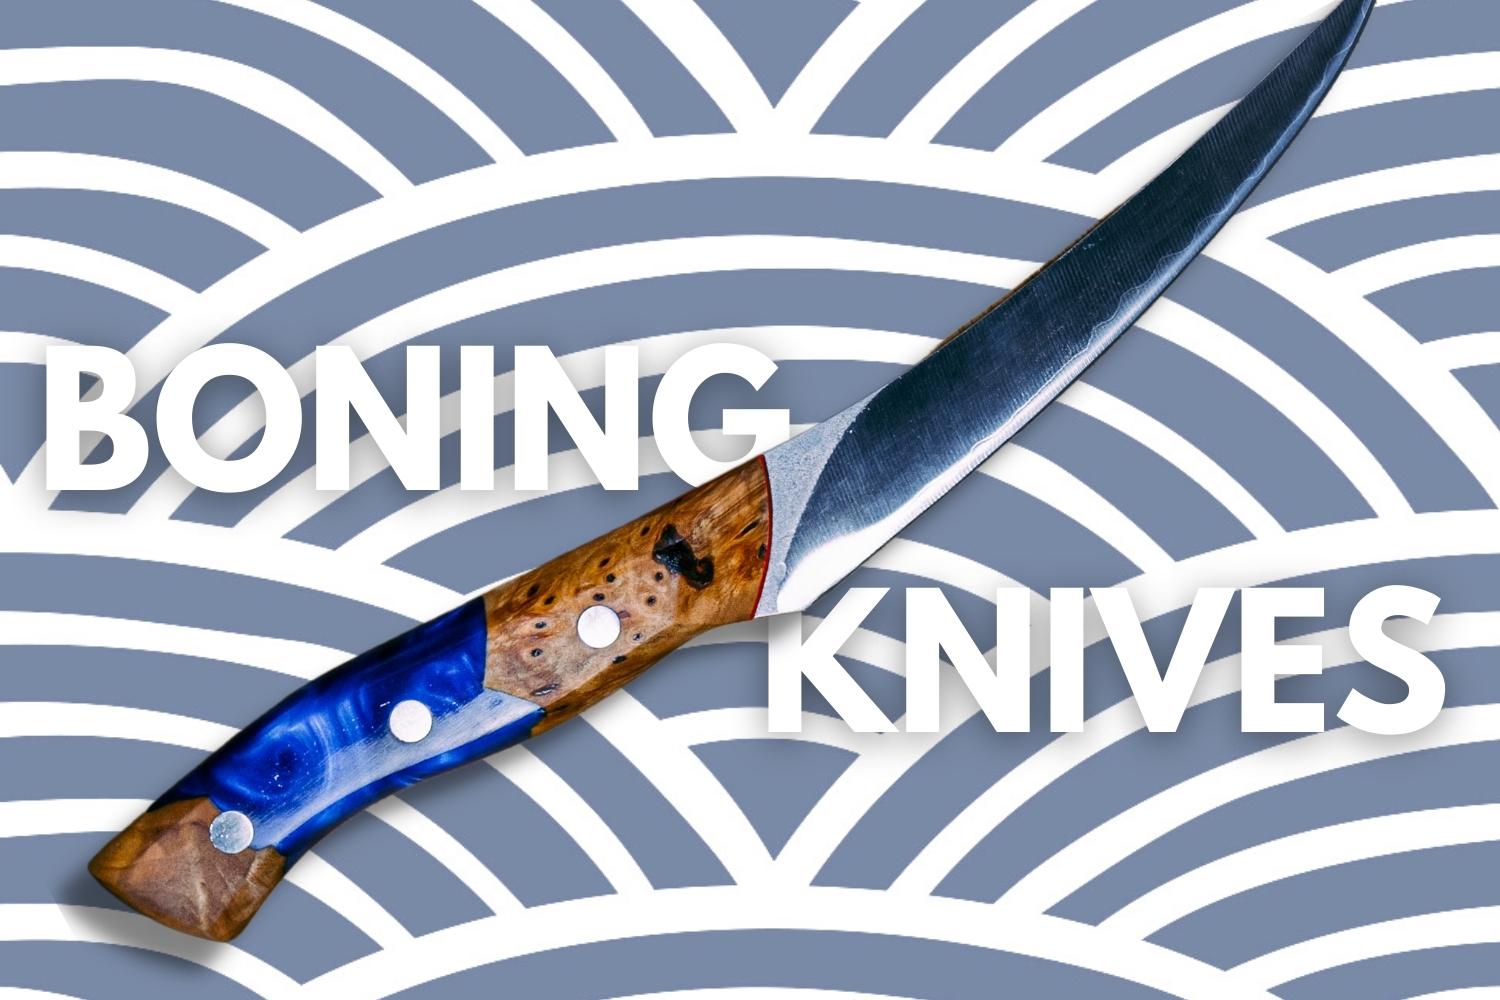 J&O knife sharpener - Latest version of the J&O knife sharpening